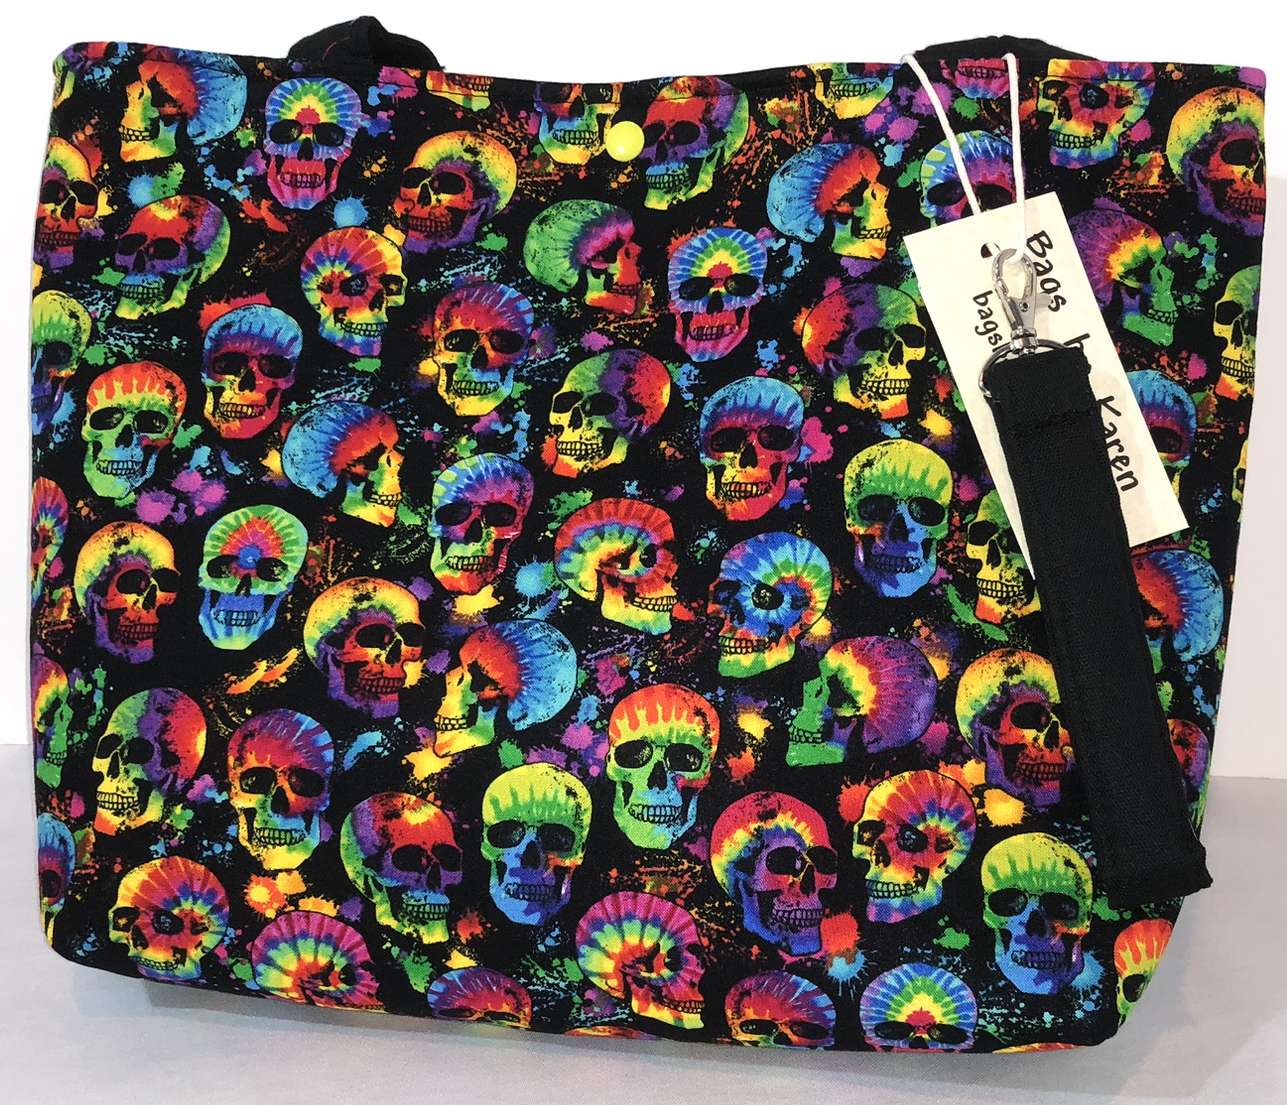 Rainbow Skulls Black Shoulder Bag Spooky Gothic Halloween Tye Dye Purse Handbag Tote + Wristlet Key FOB